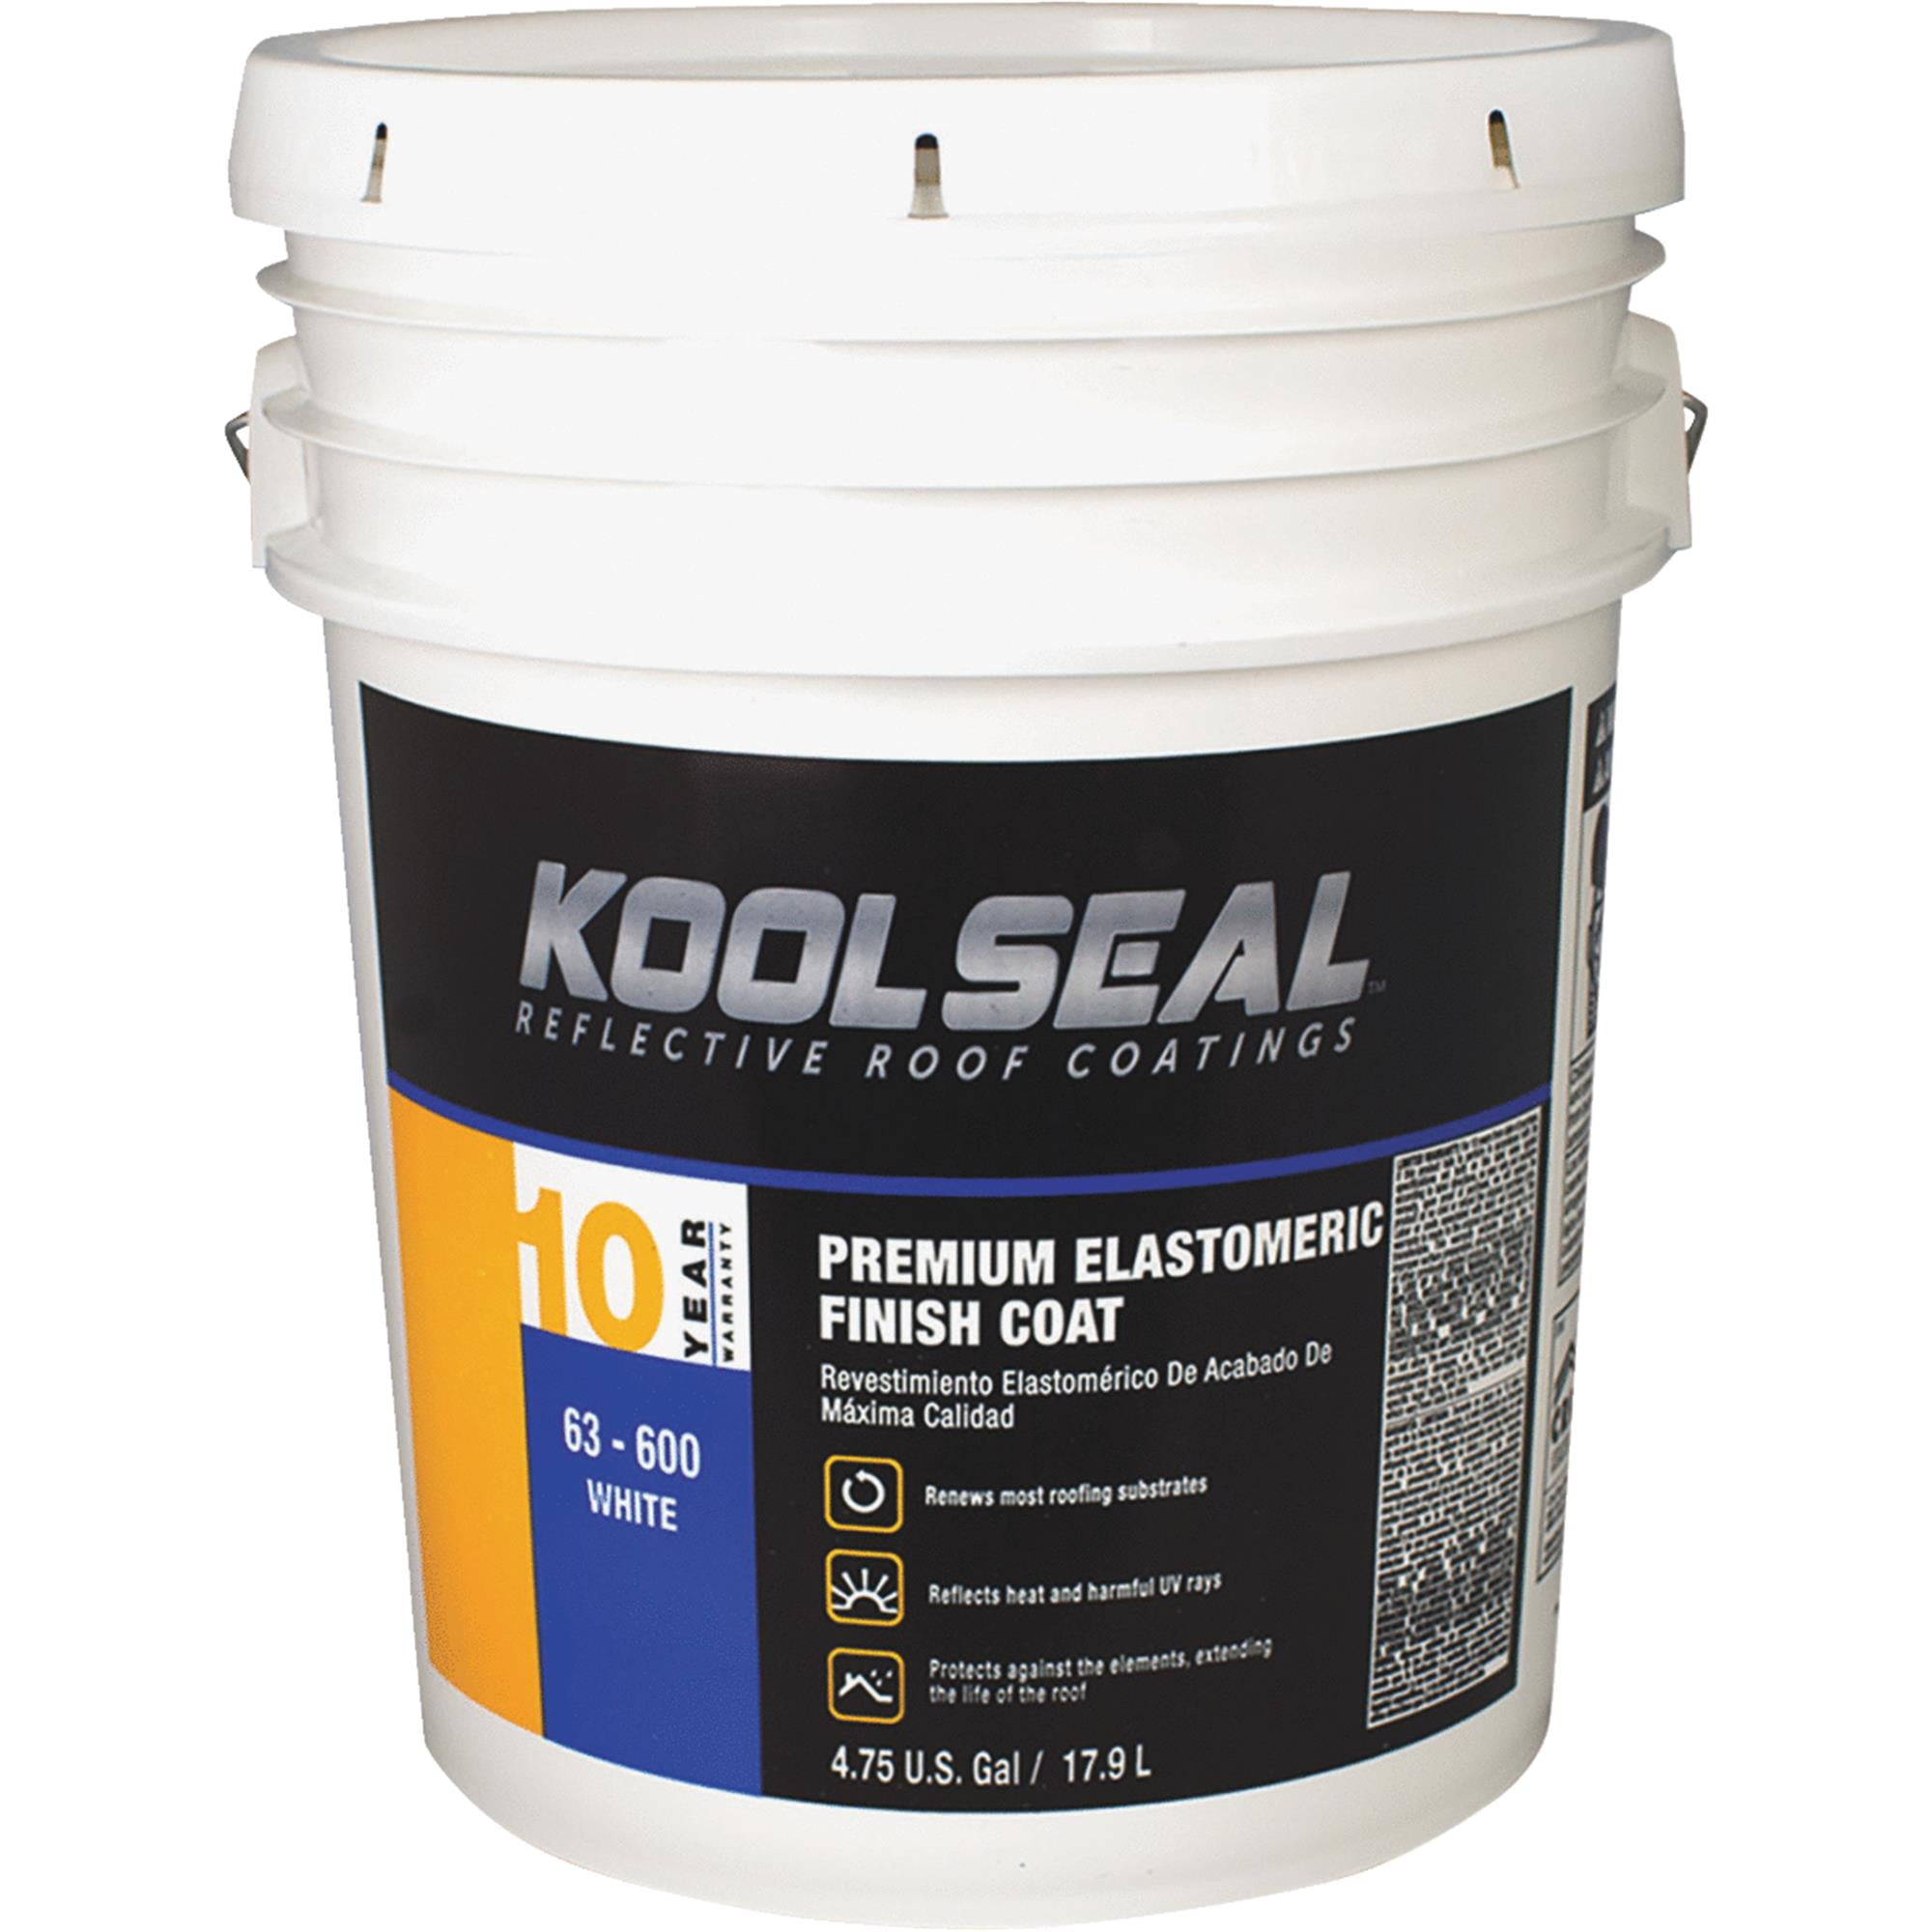 Kool Seal Premium 10 Year Elastomeric Roof Coating